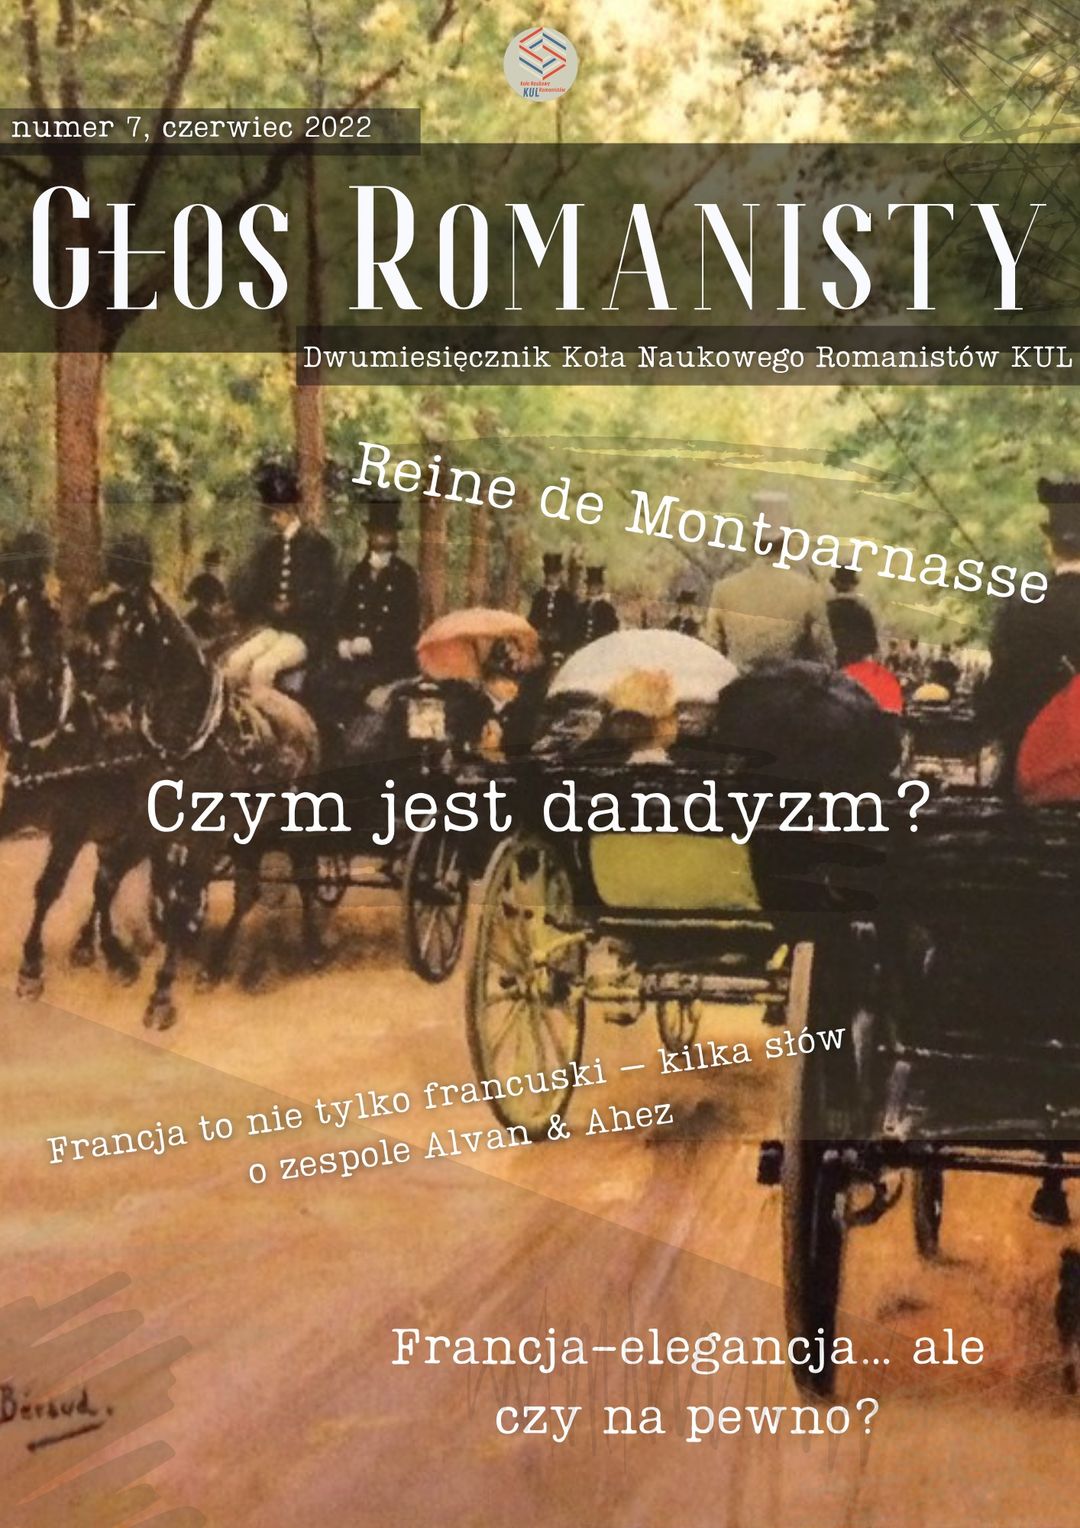 glos_romanisty_7